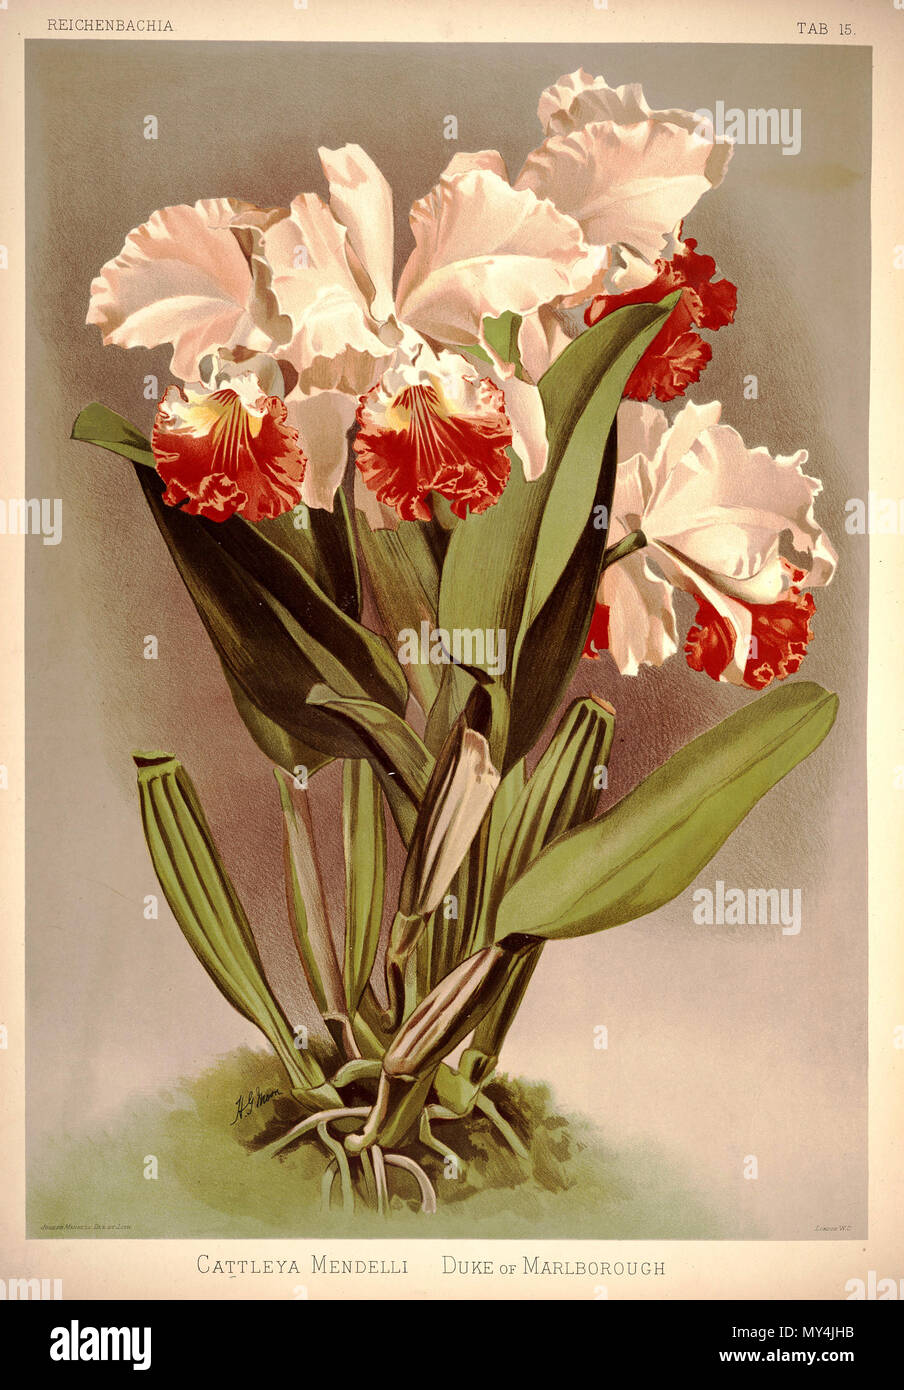 . Cattleya mendelii . between 1888 and 1894. H. Sotheran & Co., London (editor) 189 Frederick Sander - Reichenbachia I plate 15 (1888) - Cattleya mendelli Stock Photo